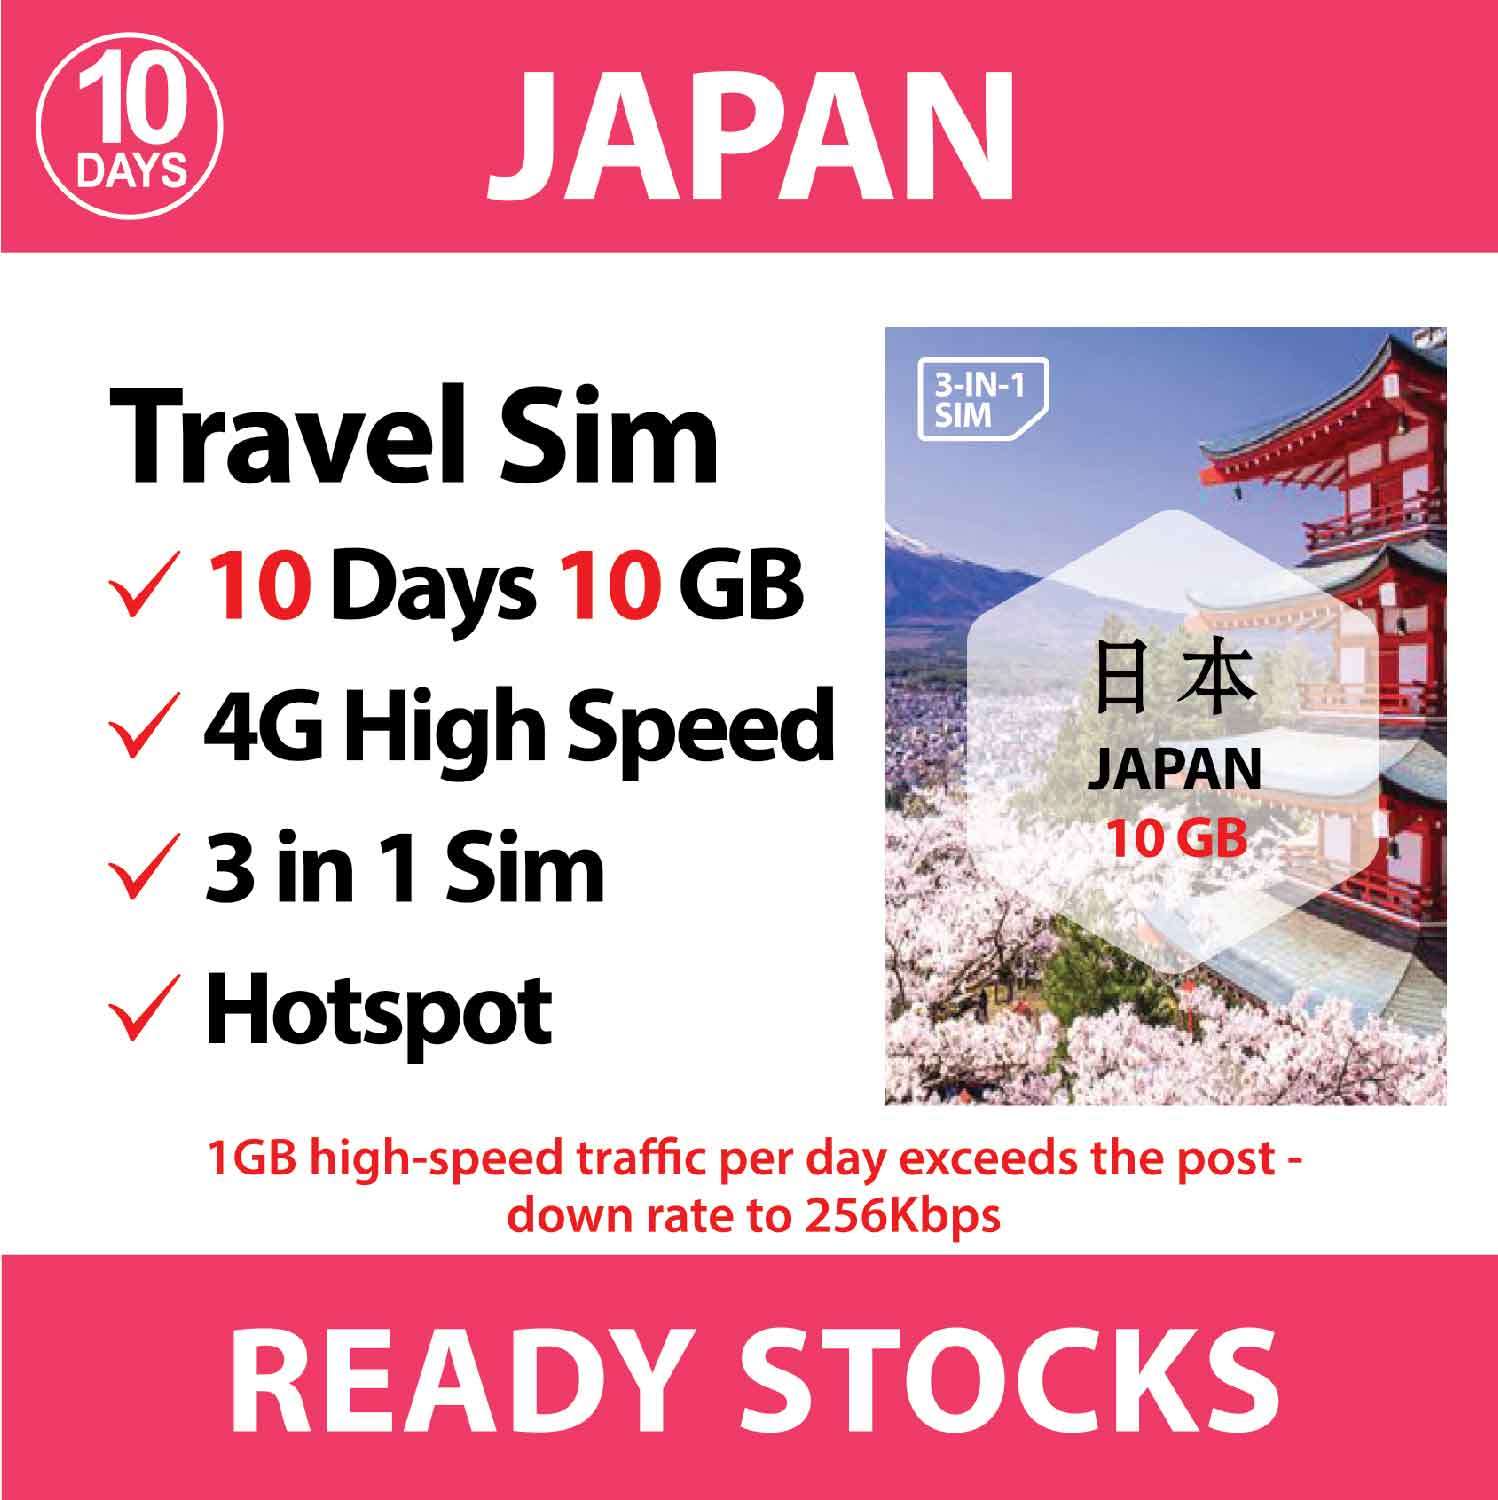 Japan 10 Day 10 GB.jpg